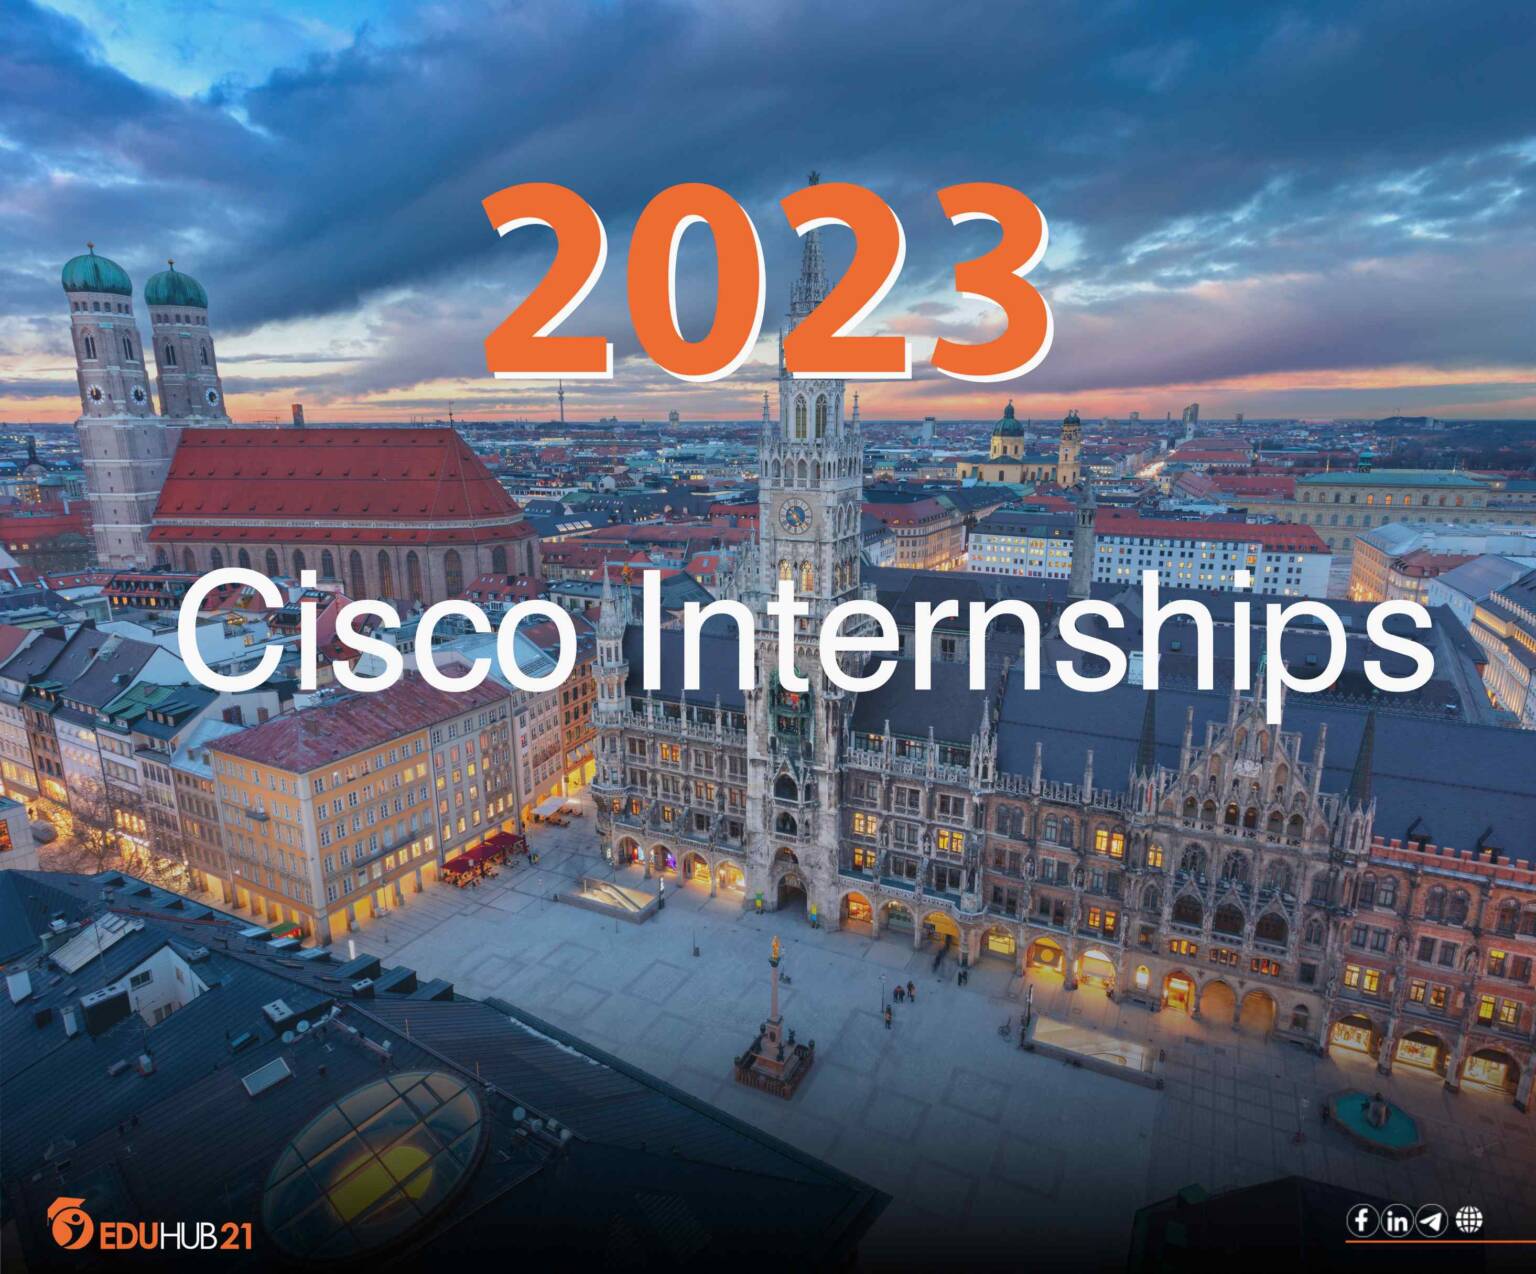 Cisco Internships 2023 Eduhub21